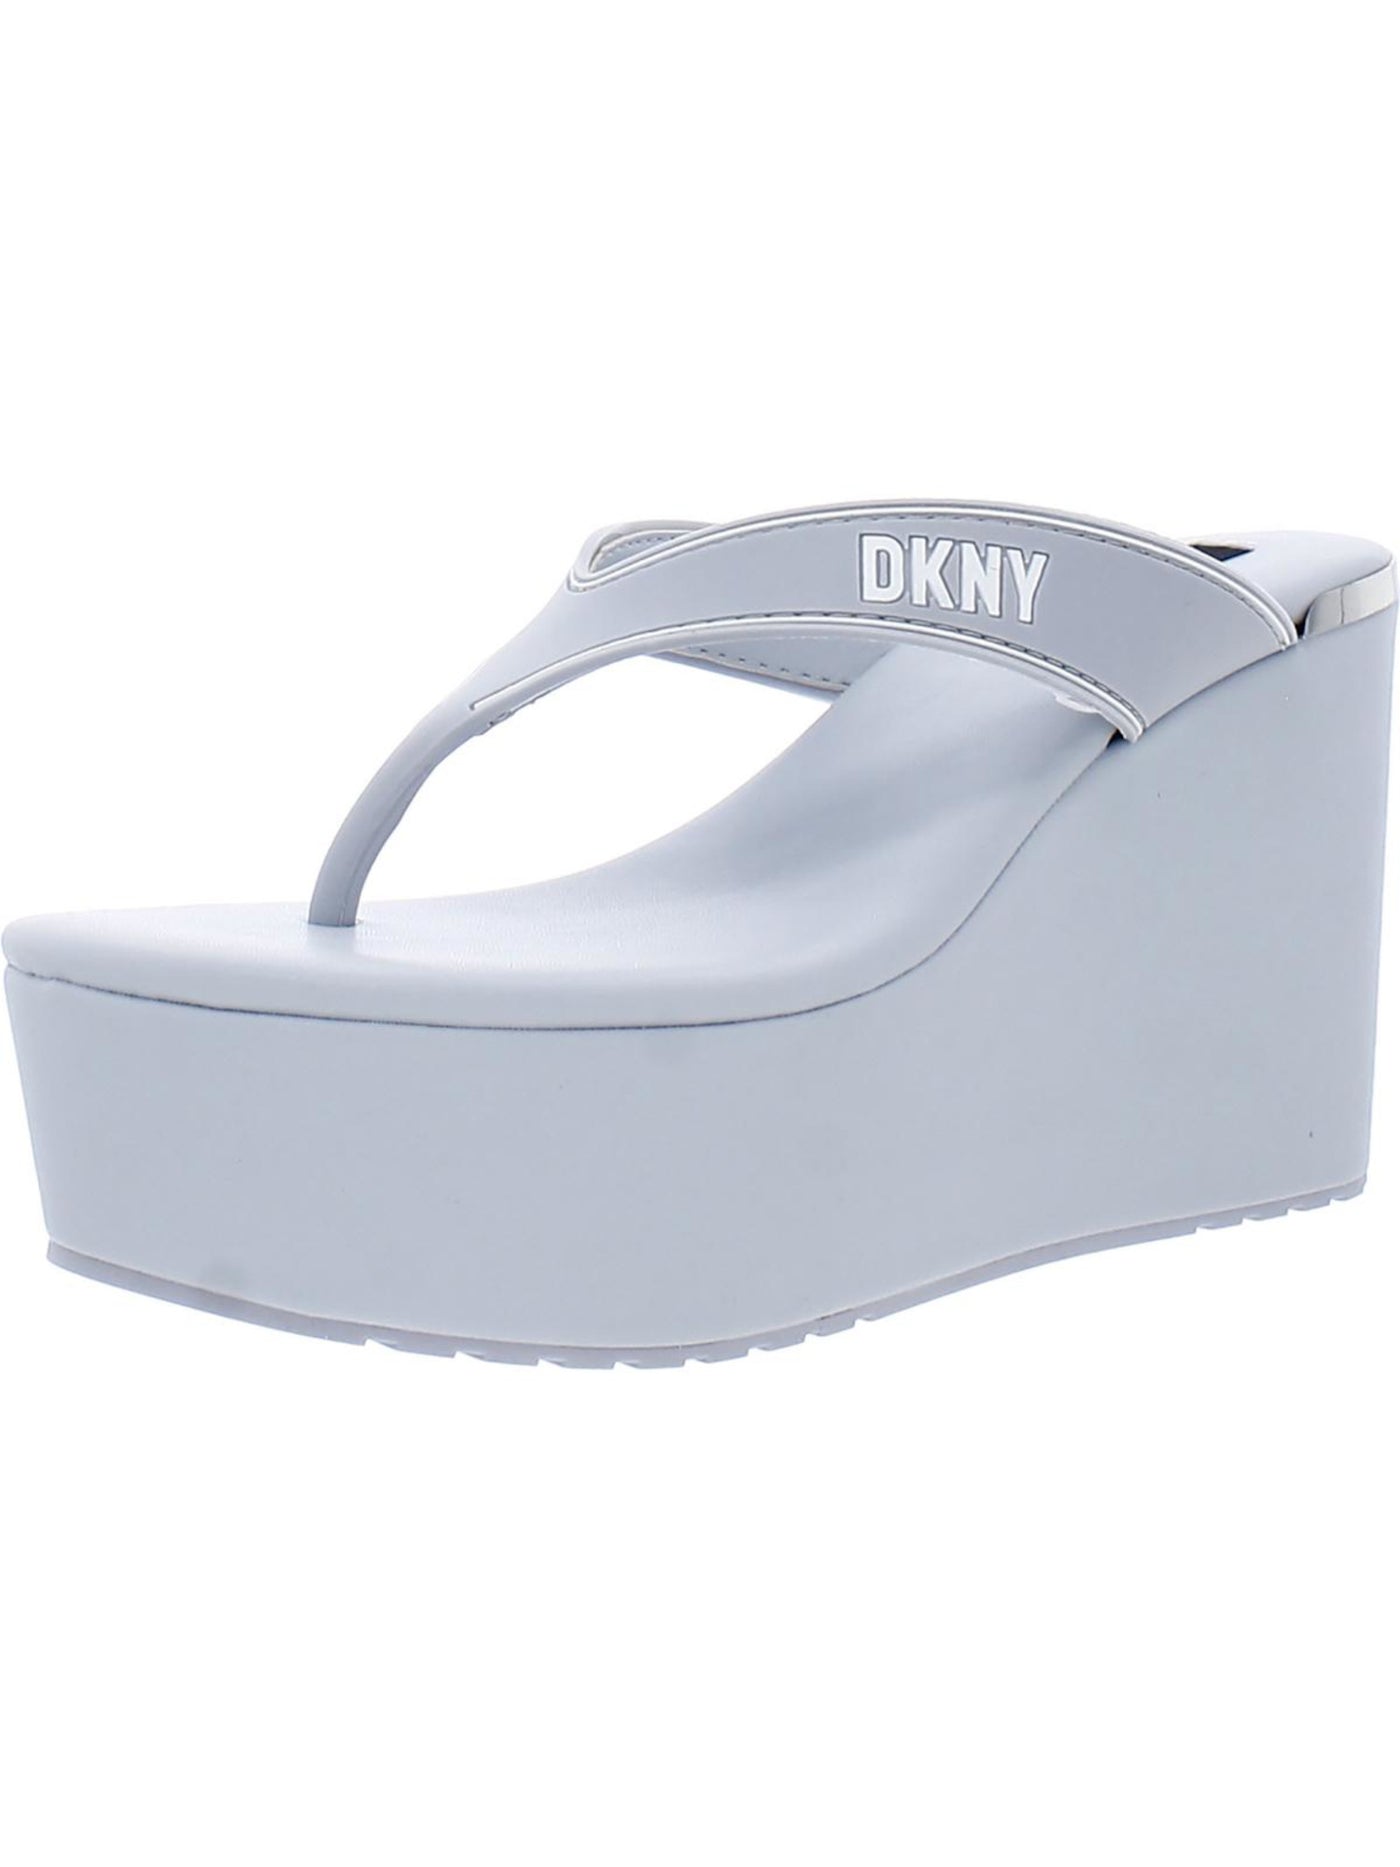 DKNY Womens Gray Metallic 2" Platform Padded Trina Round Toe Wedge Slip On Thong Sandals Shoes 7 M